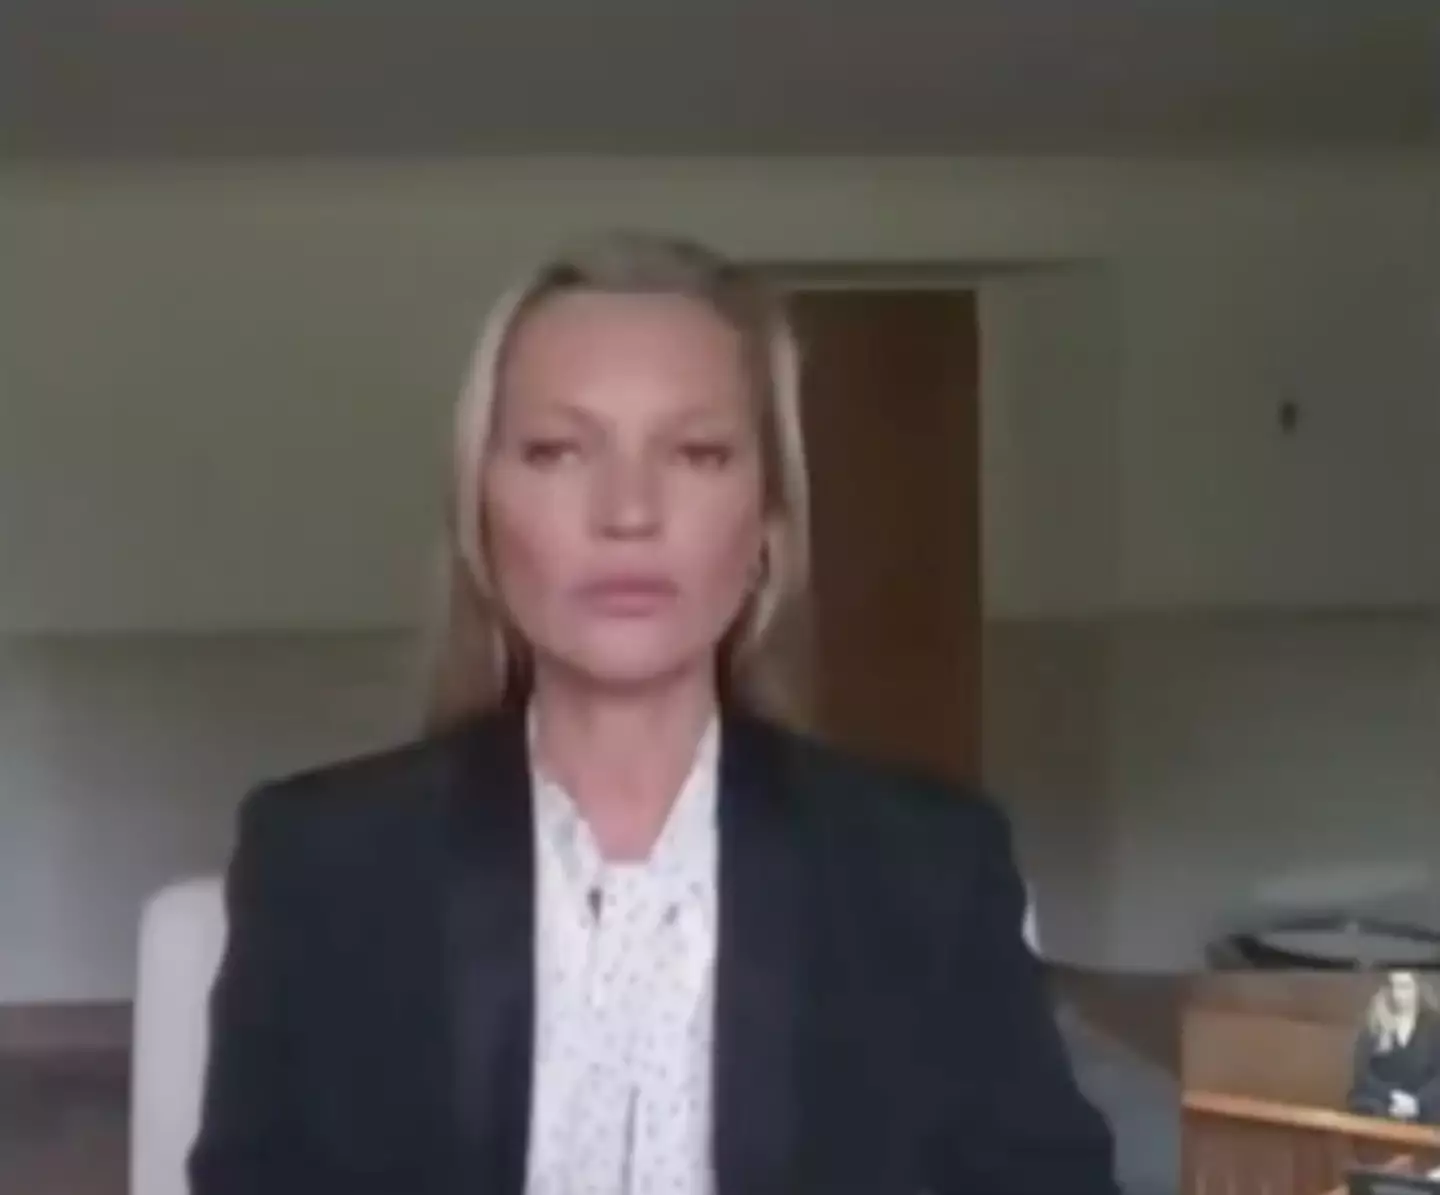 Kate Moss provided her testimony via videolink. (